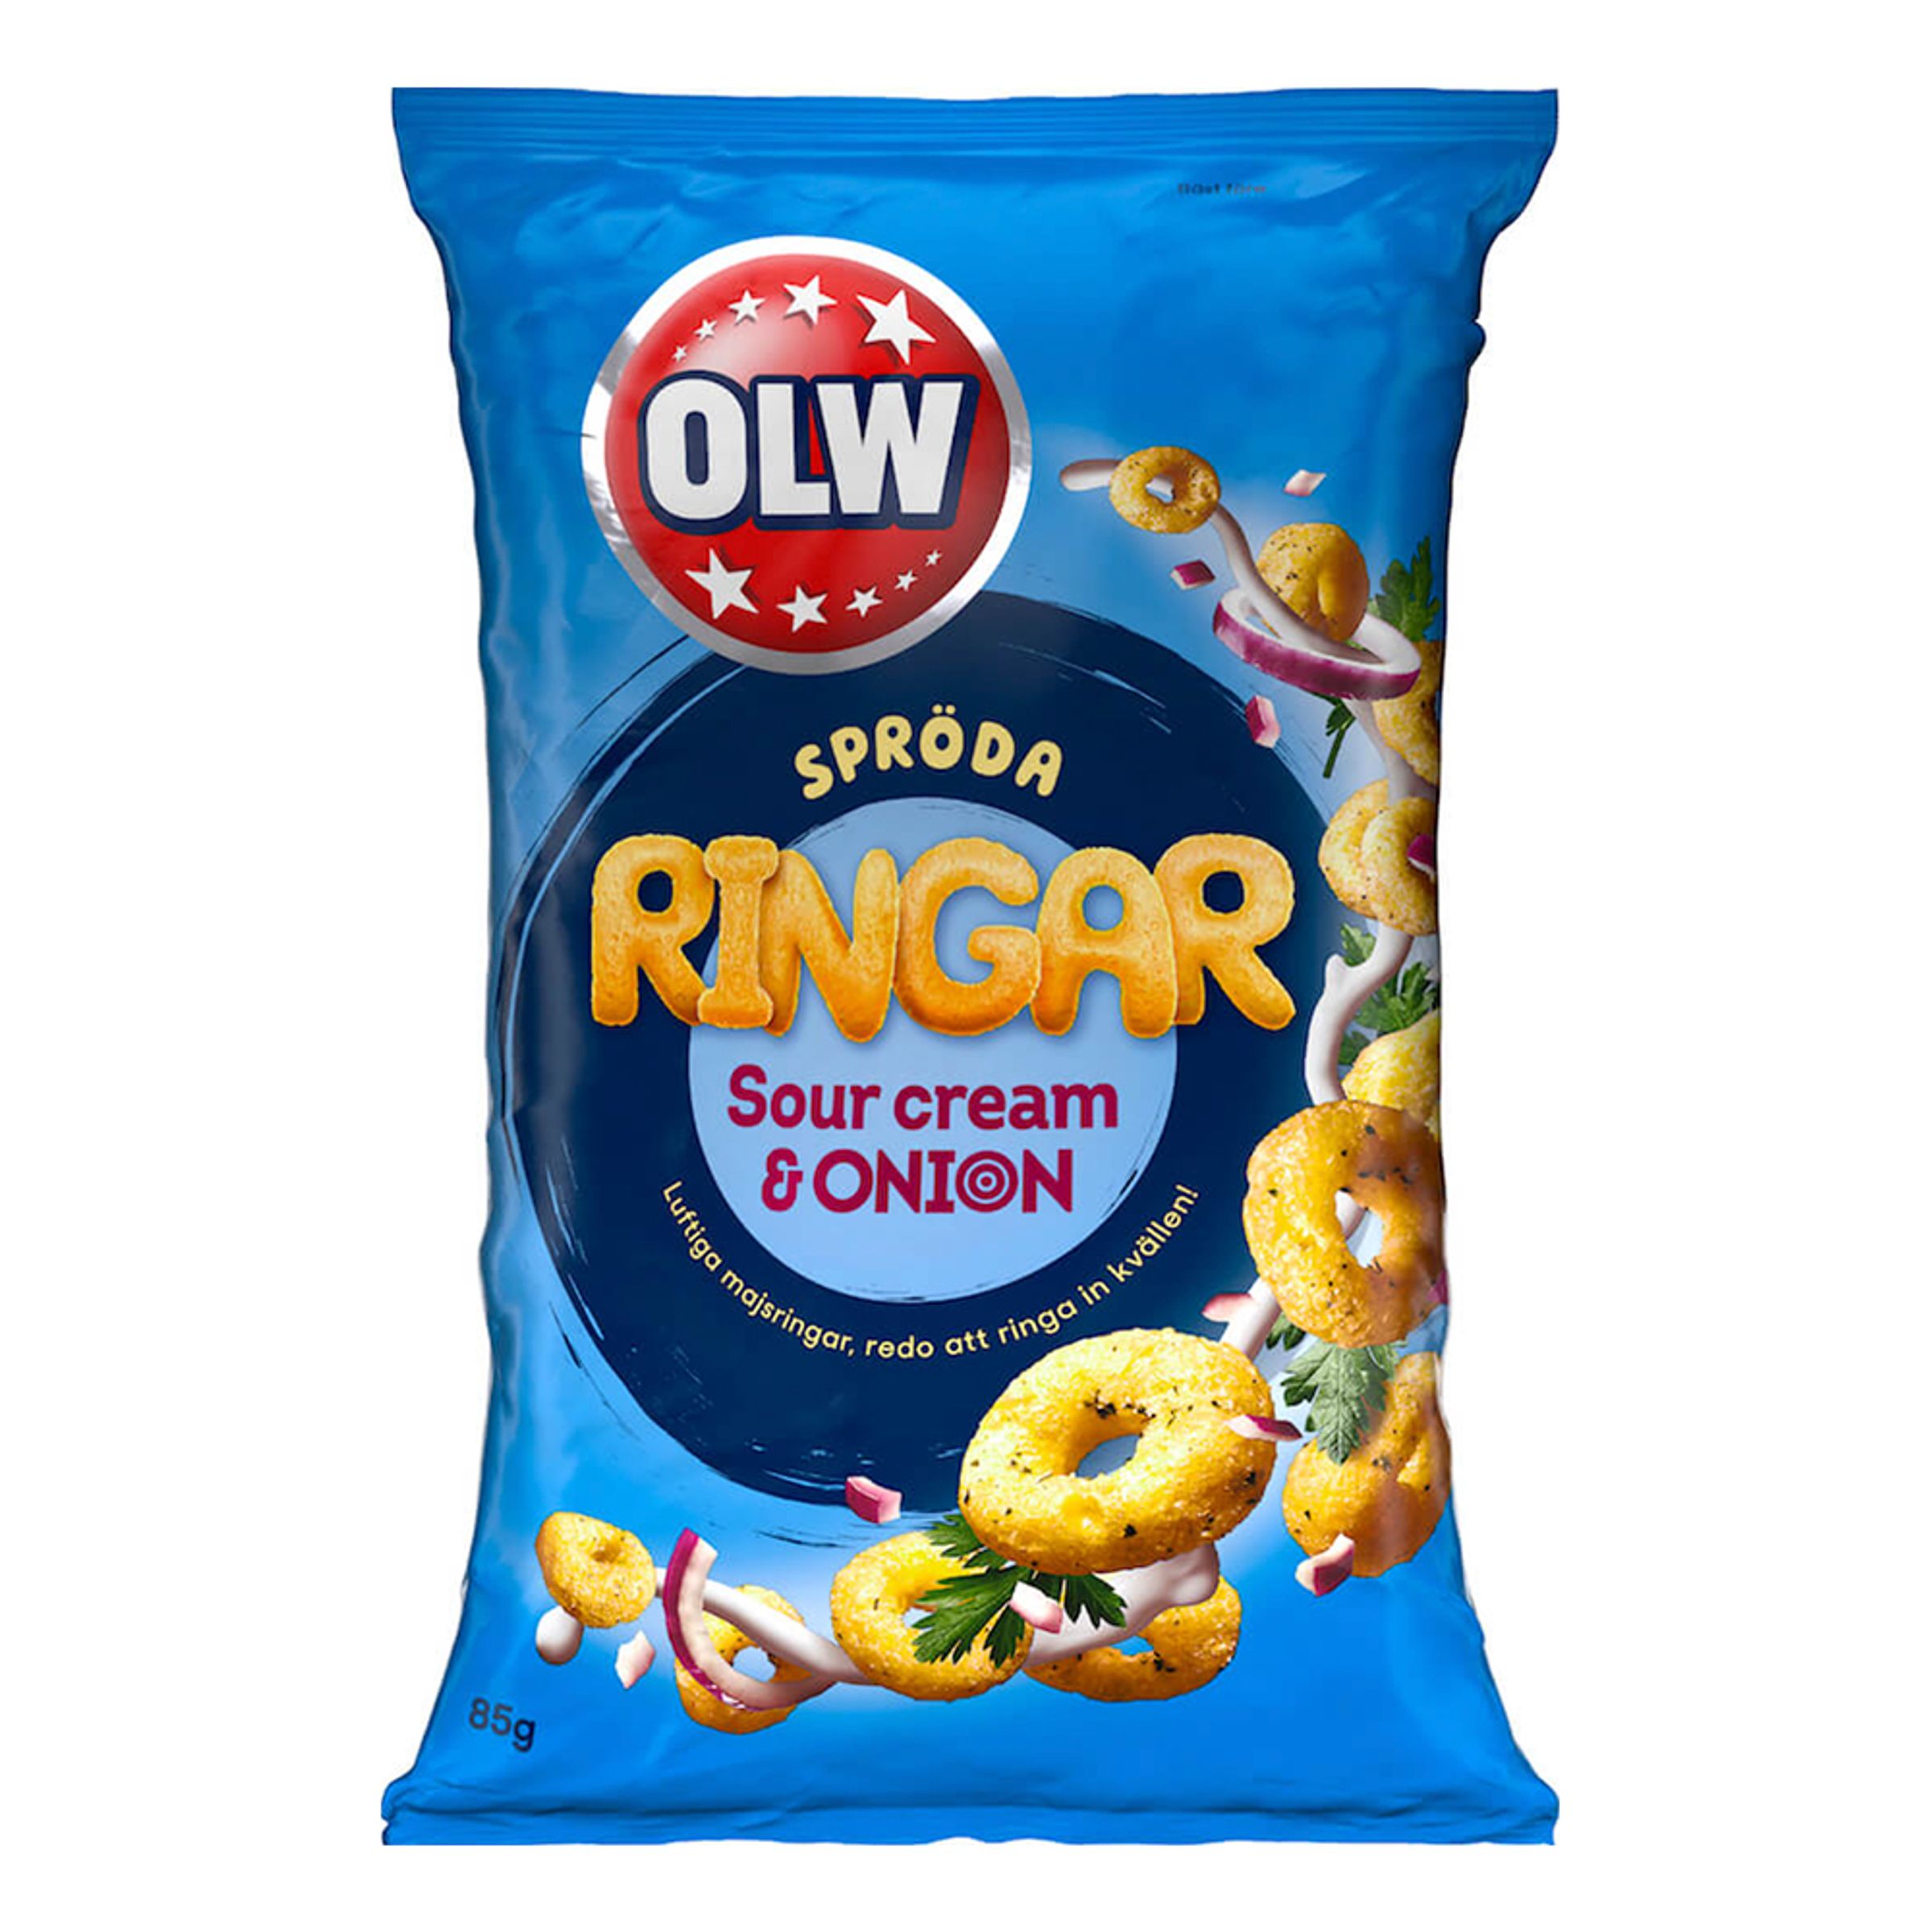 OLW Spröda Ringar Sourcream & Onion - 85 gram